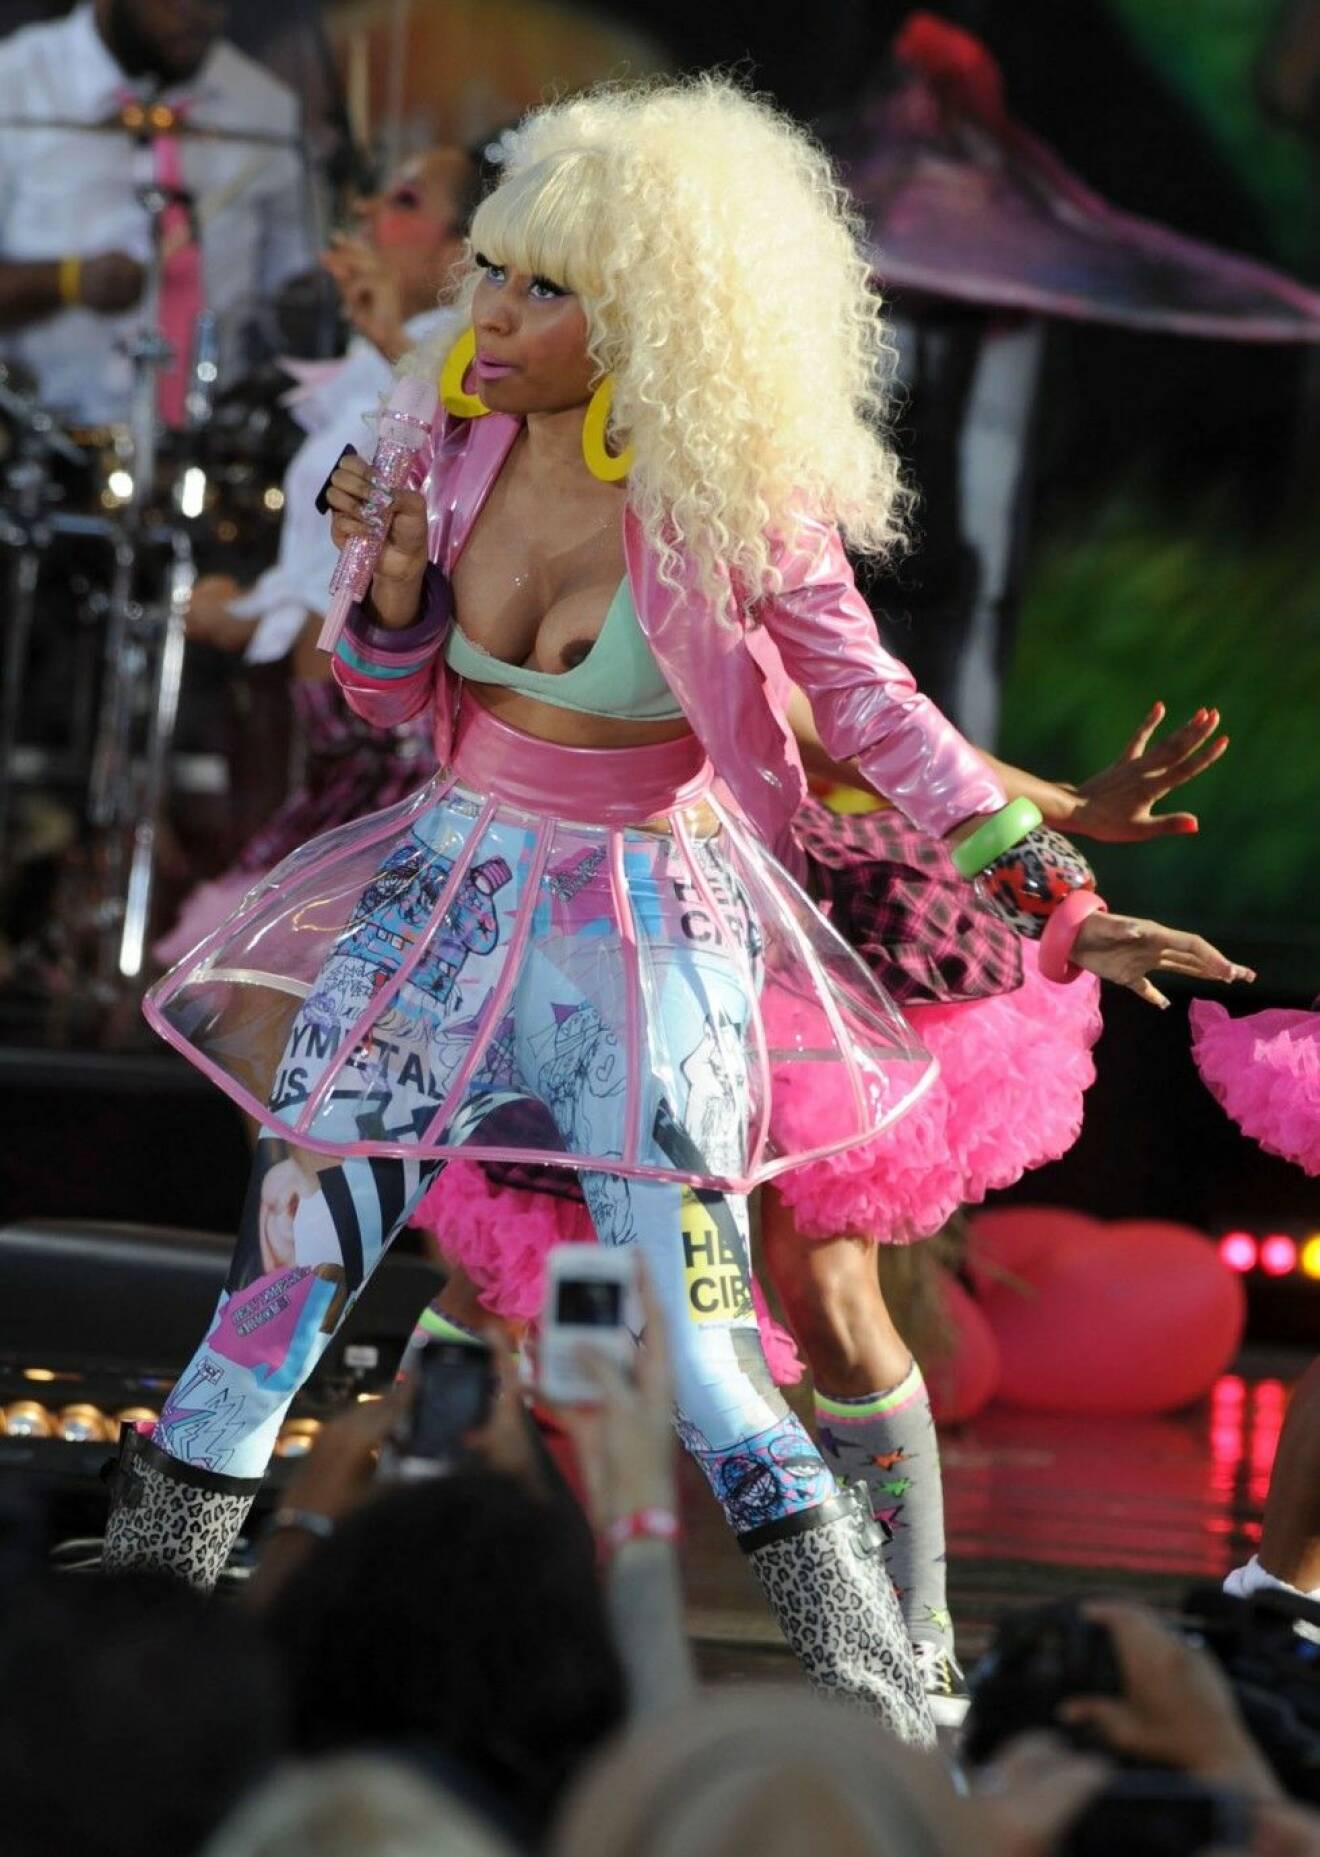 Nicki Minaj has a serious wardrobe malfunction